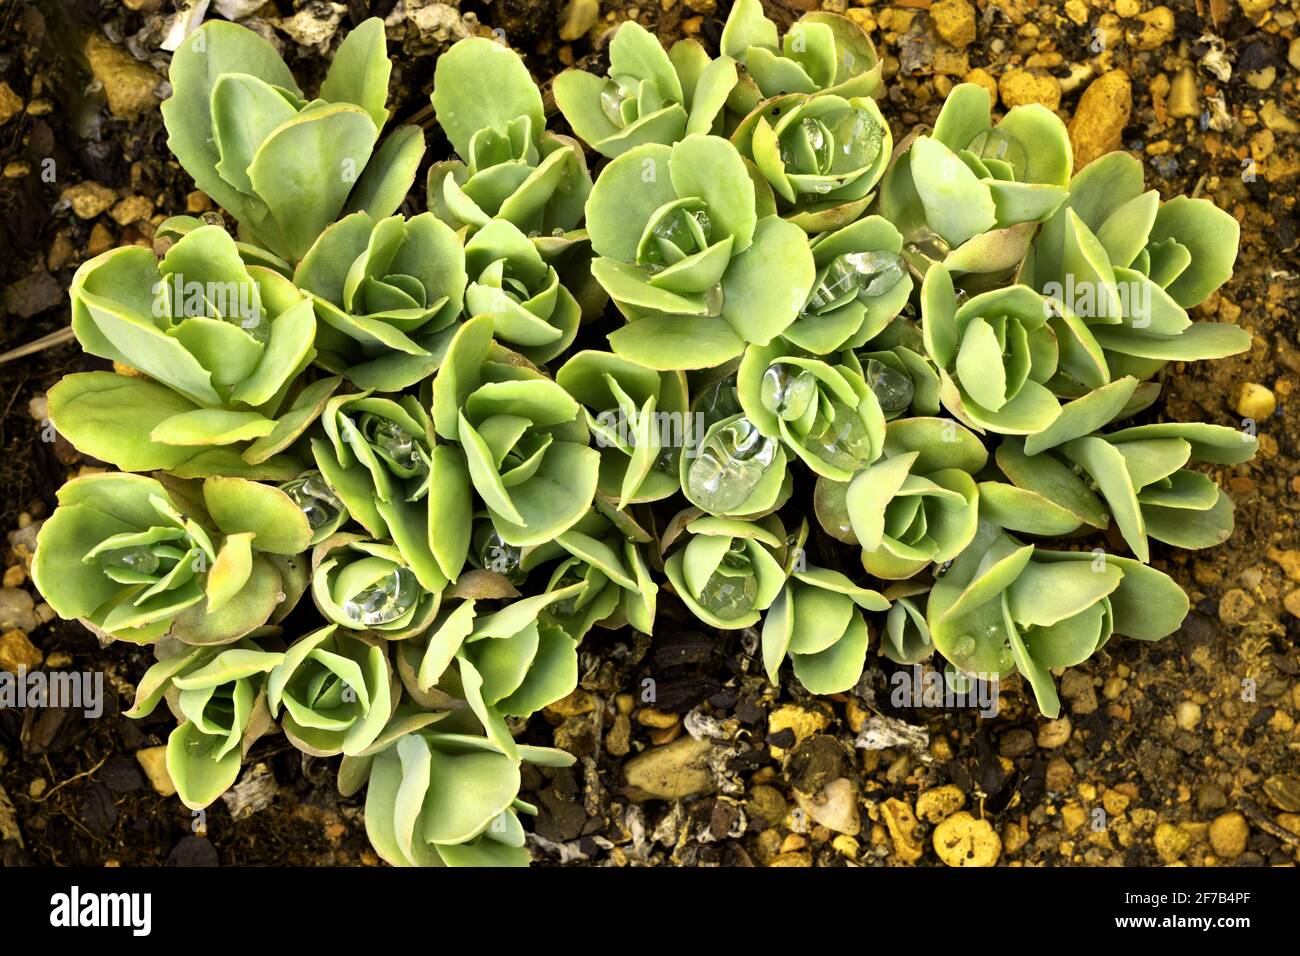 Callera grass, plant cures all, Sedum telephium green shoots of spring Stock Photo